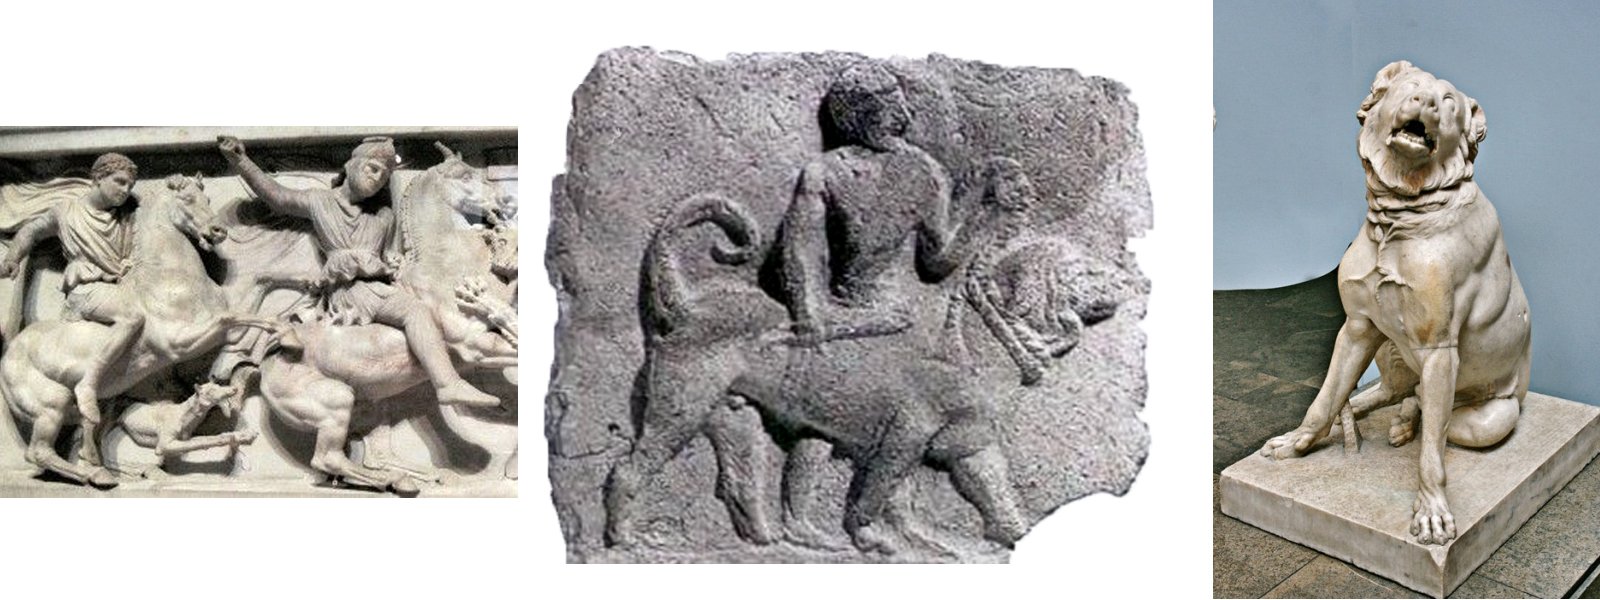 پریتاس اولین سگ معروف تاریخ